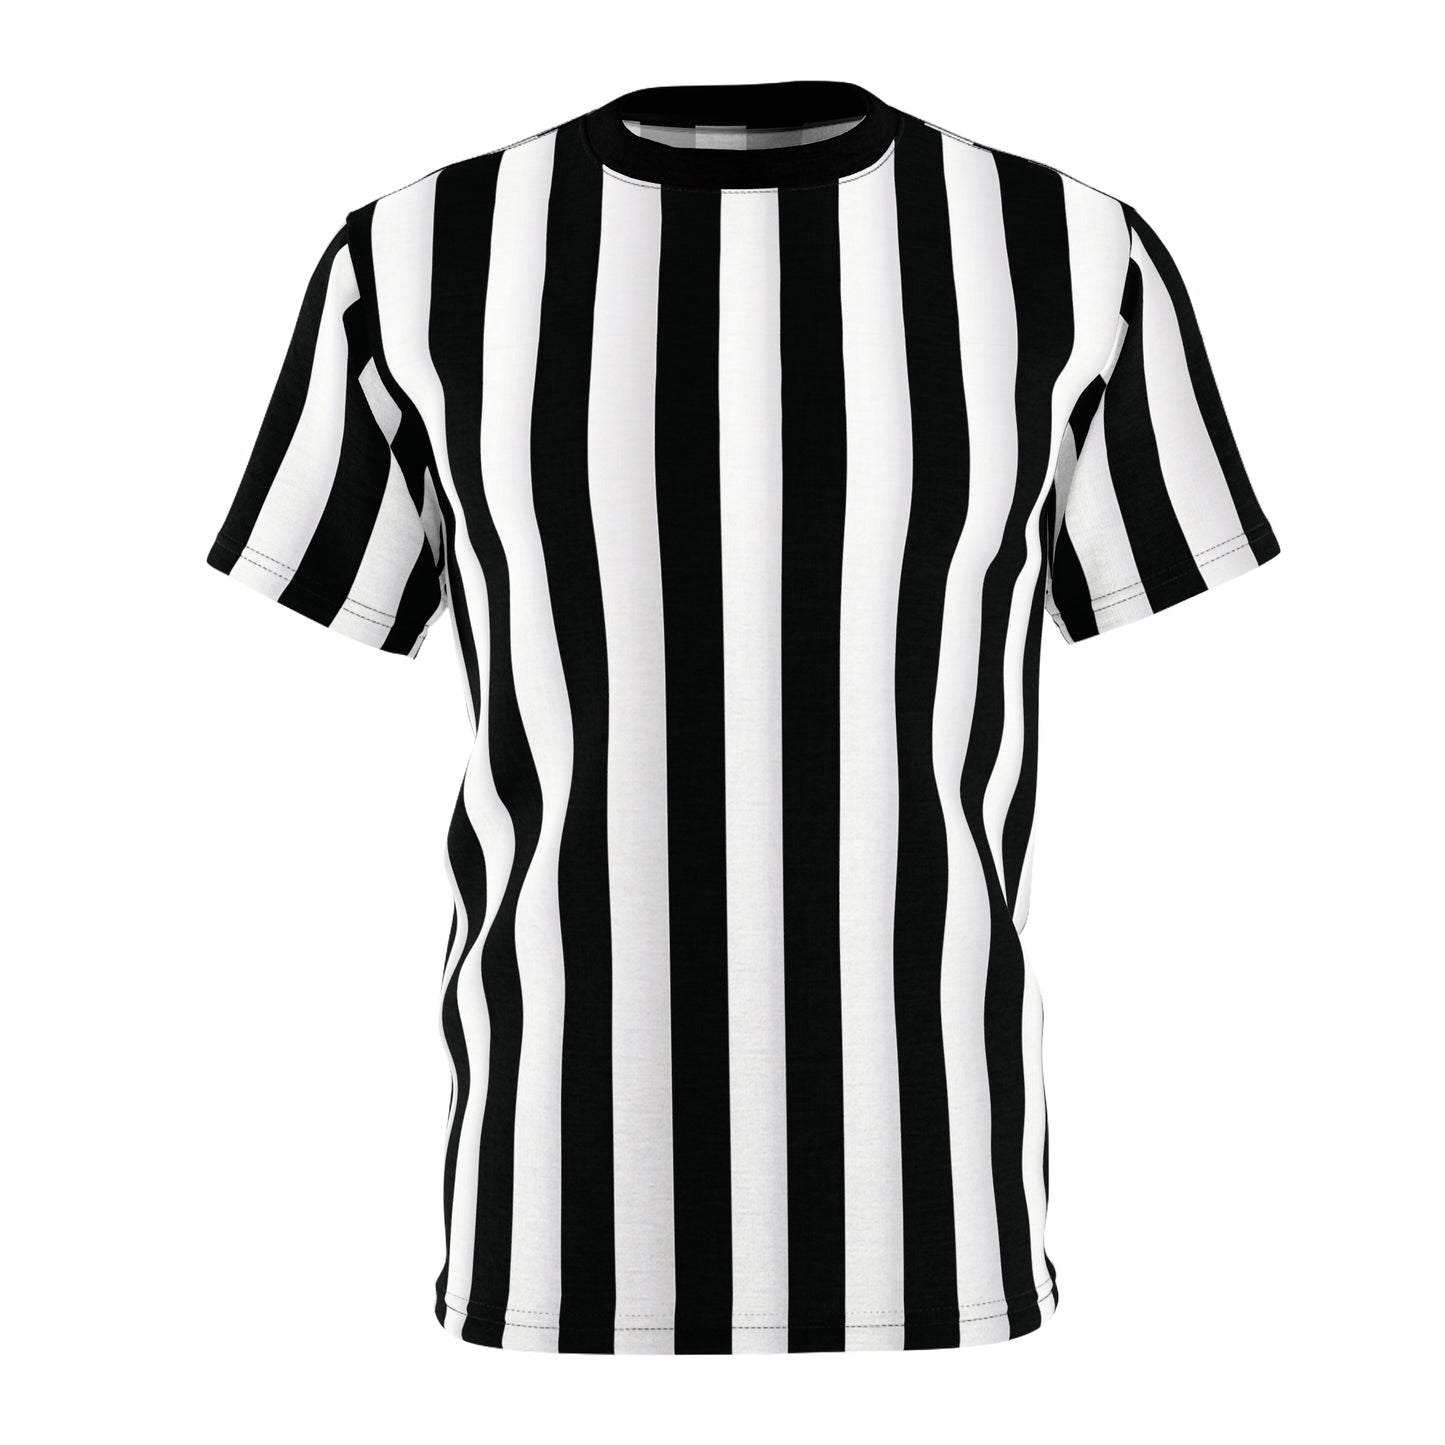 Black White Striped Tshirt, Designer Graphic Aesthetic Lightweight Heavyweight Crewneck Men Women Tee Top Short Sleeve Shirt